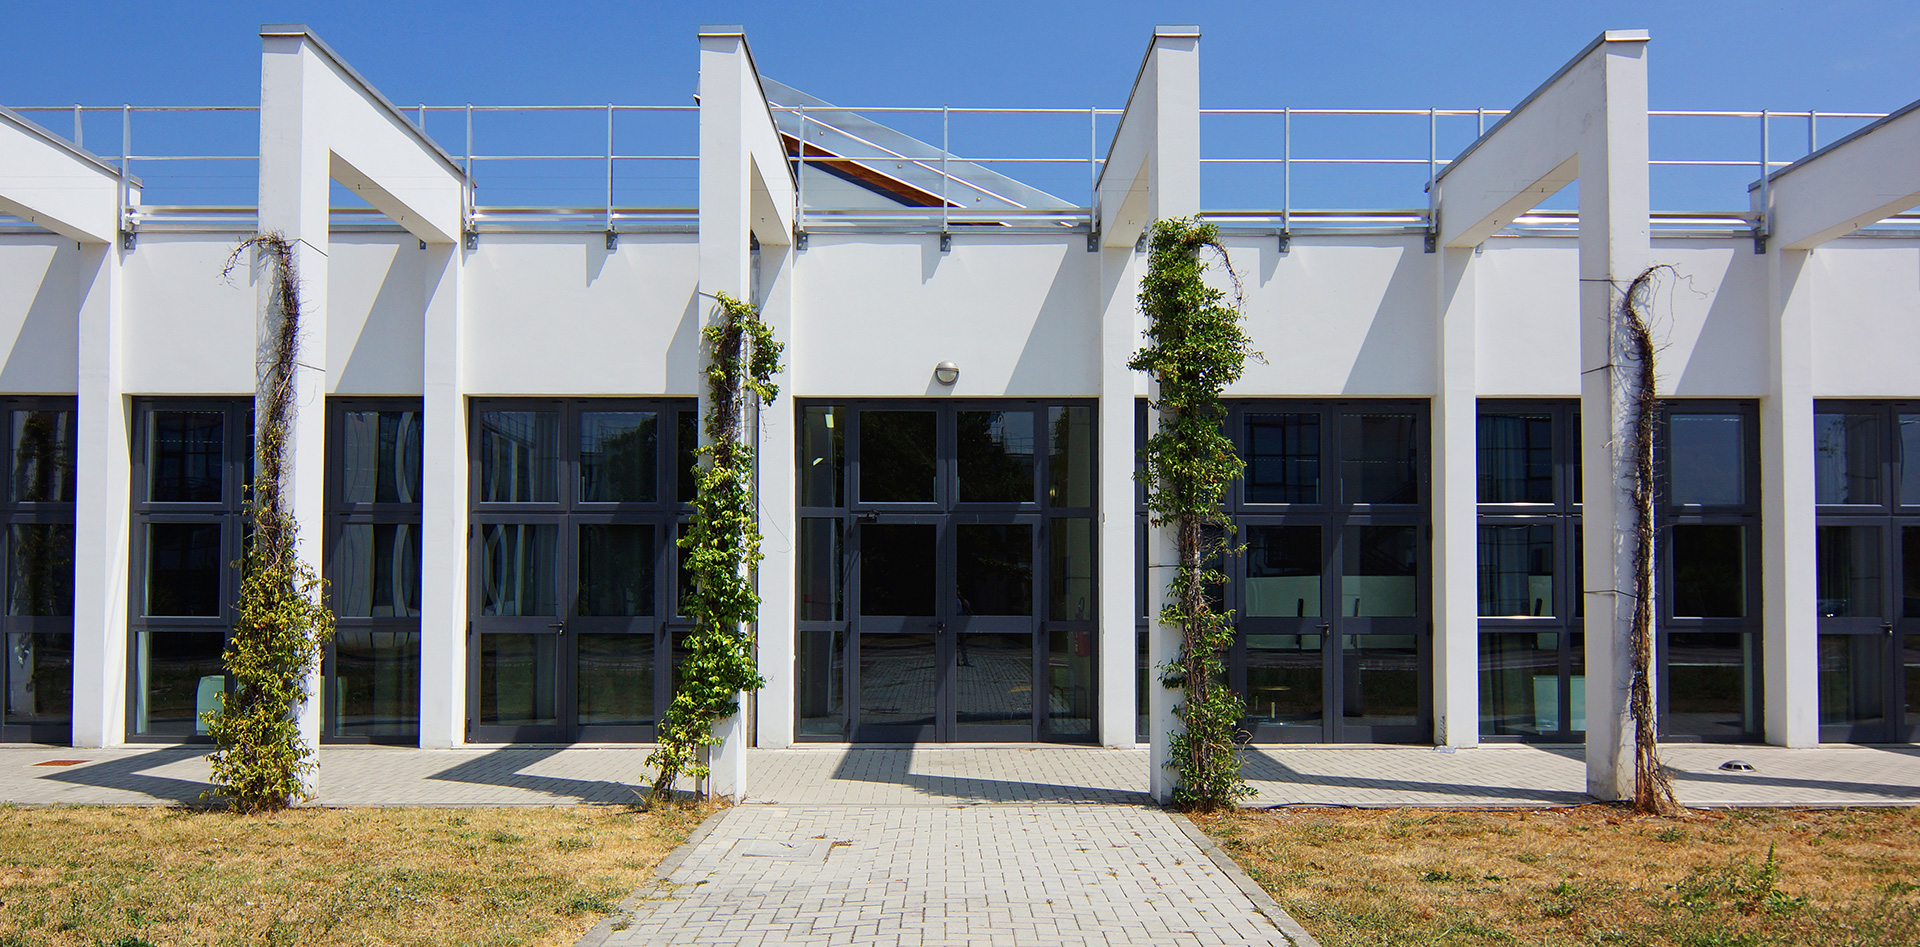 Aule Campus Università di Parma, Binini Partners, Società di architettura e ingegneria